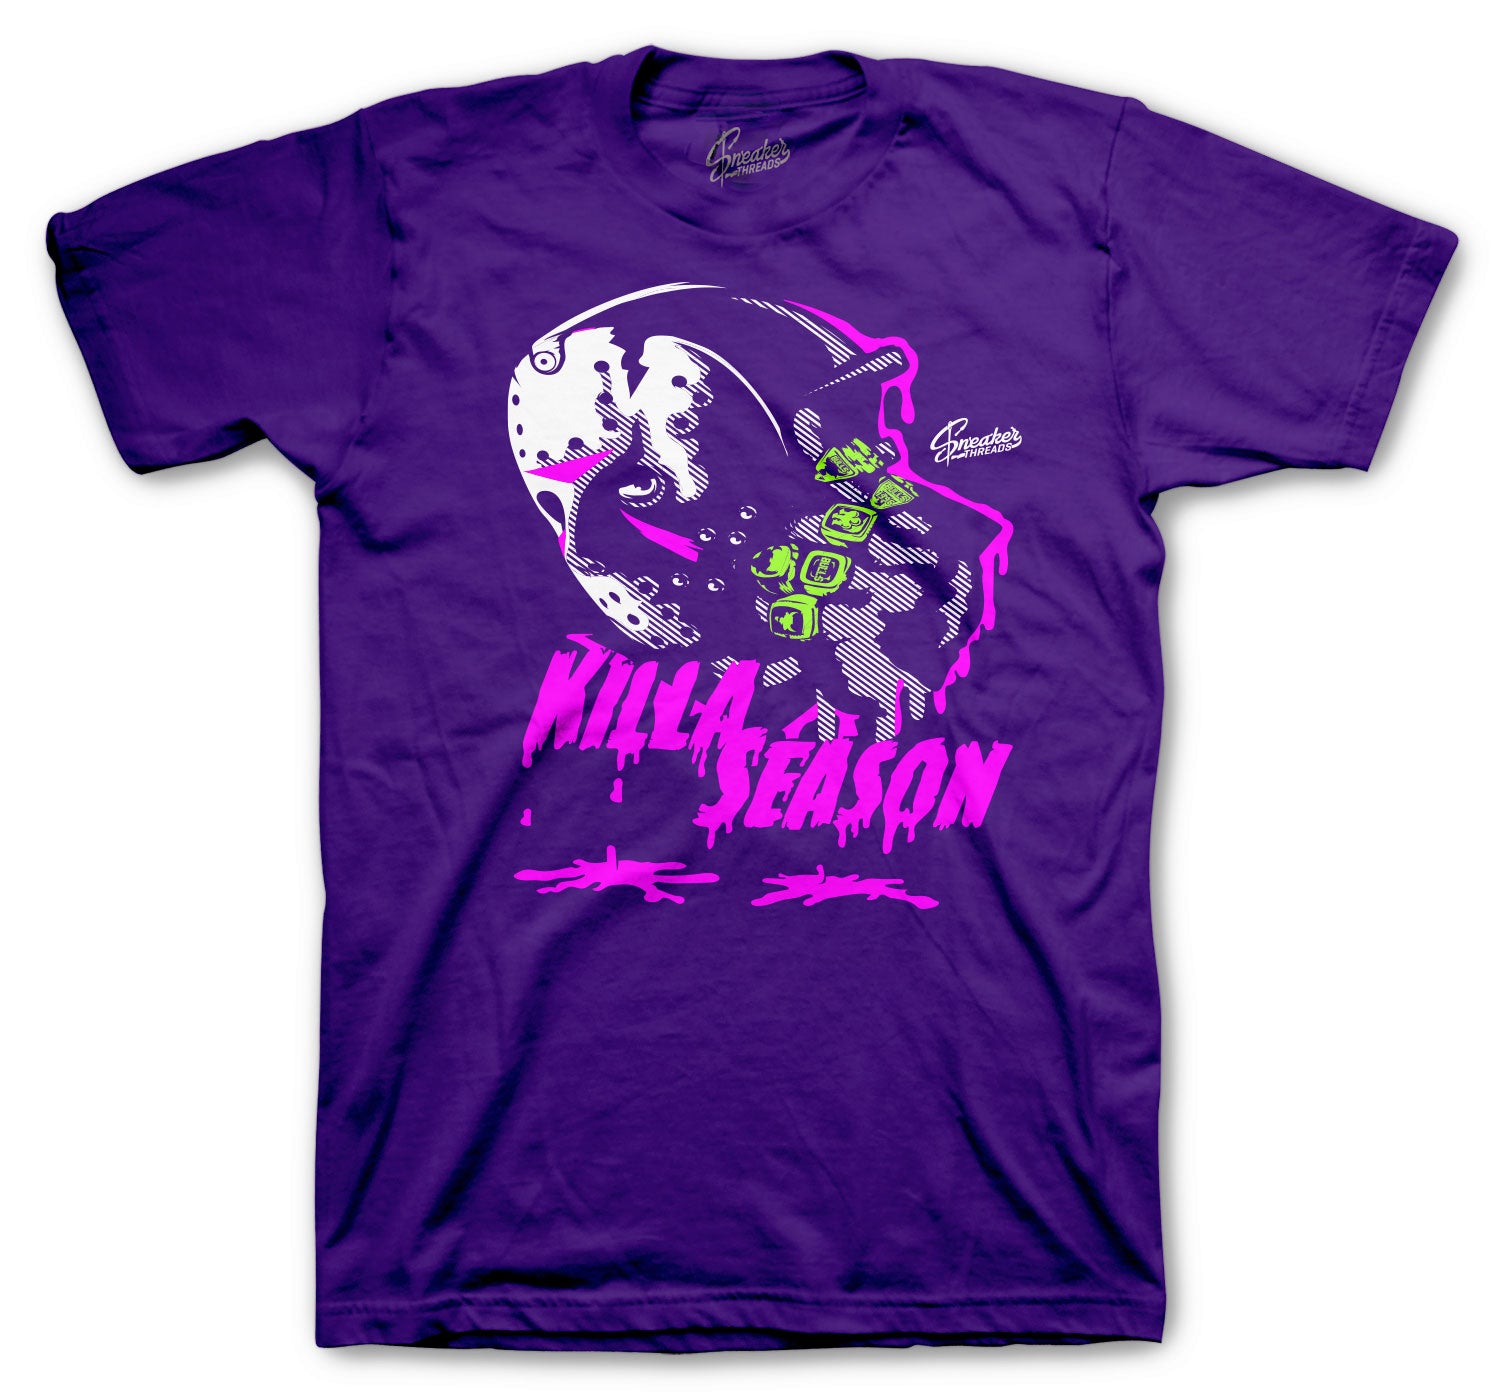 Retro 5 Alternate Bel Air Shirt - Killa Season - Purple